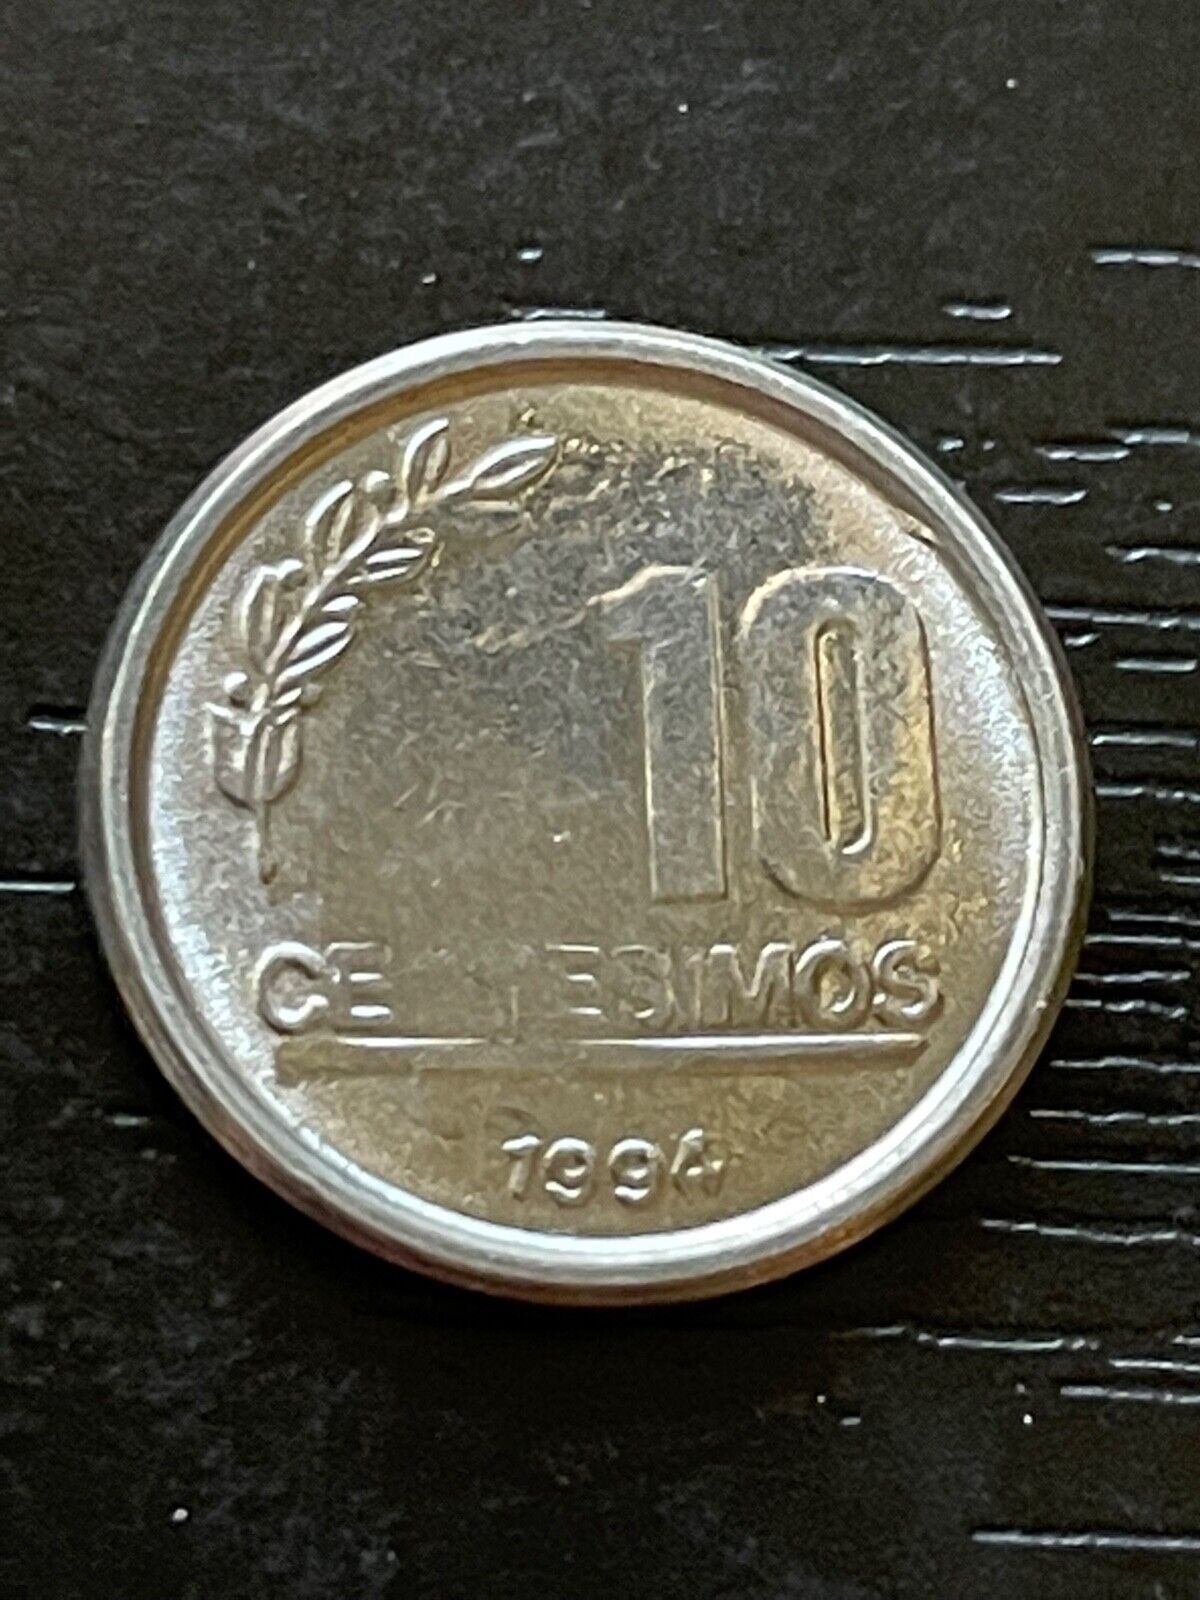 1994 Uruguay 10 Centesimos Steel Coin